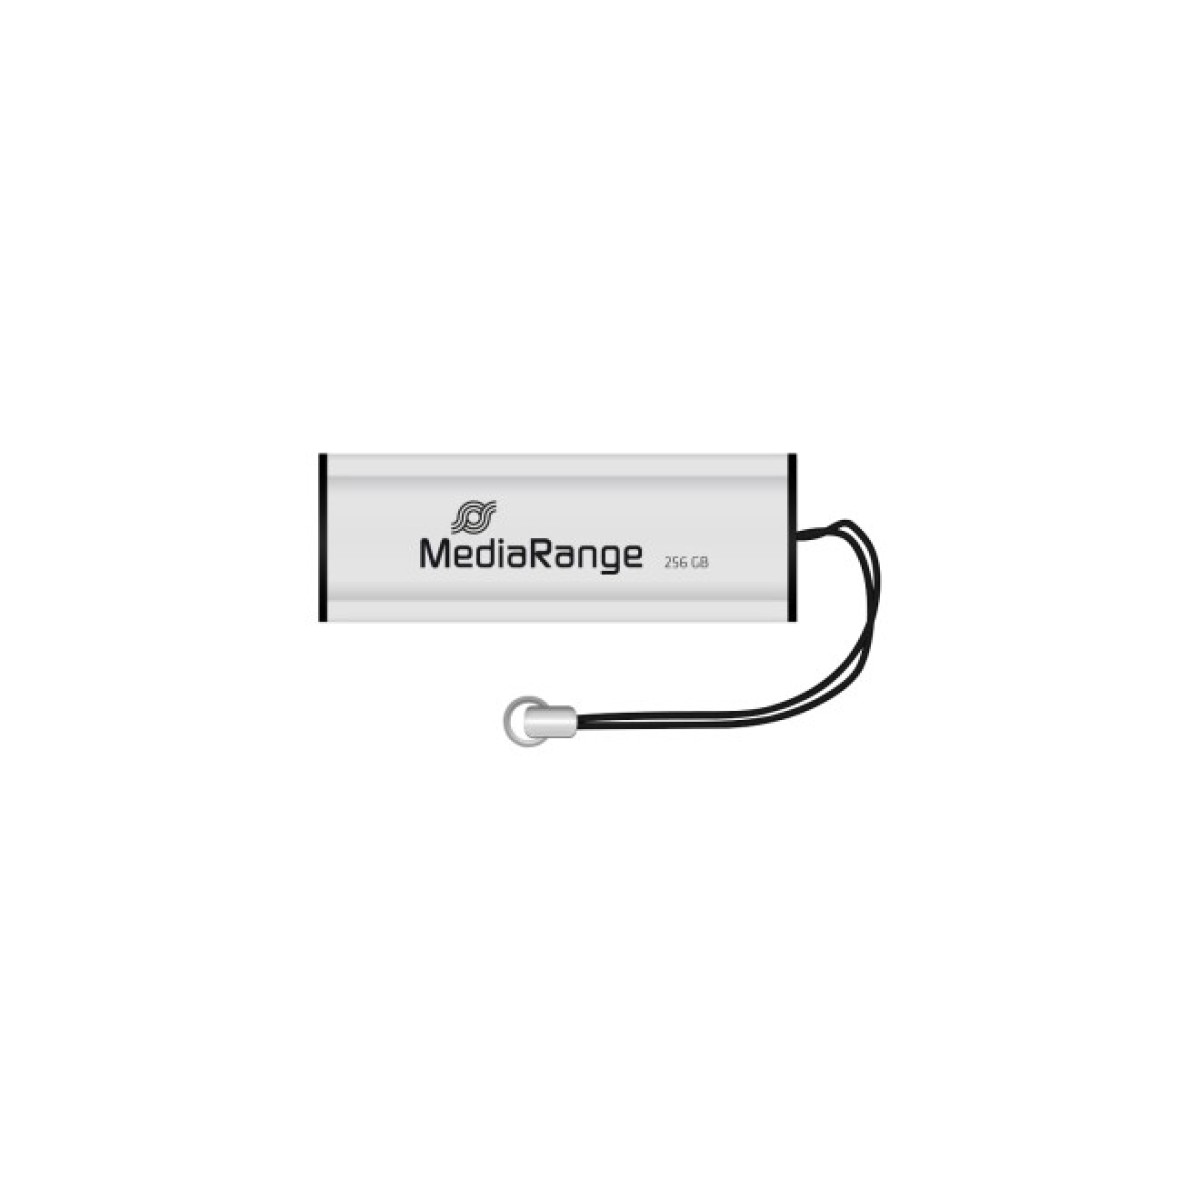 USB флеш накопитель Mediarange 256GB Black/Silver USB 3.0 (MR919) 256_256.jpg